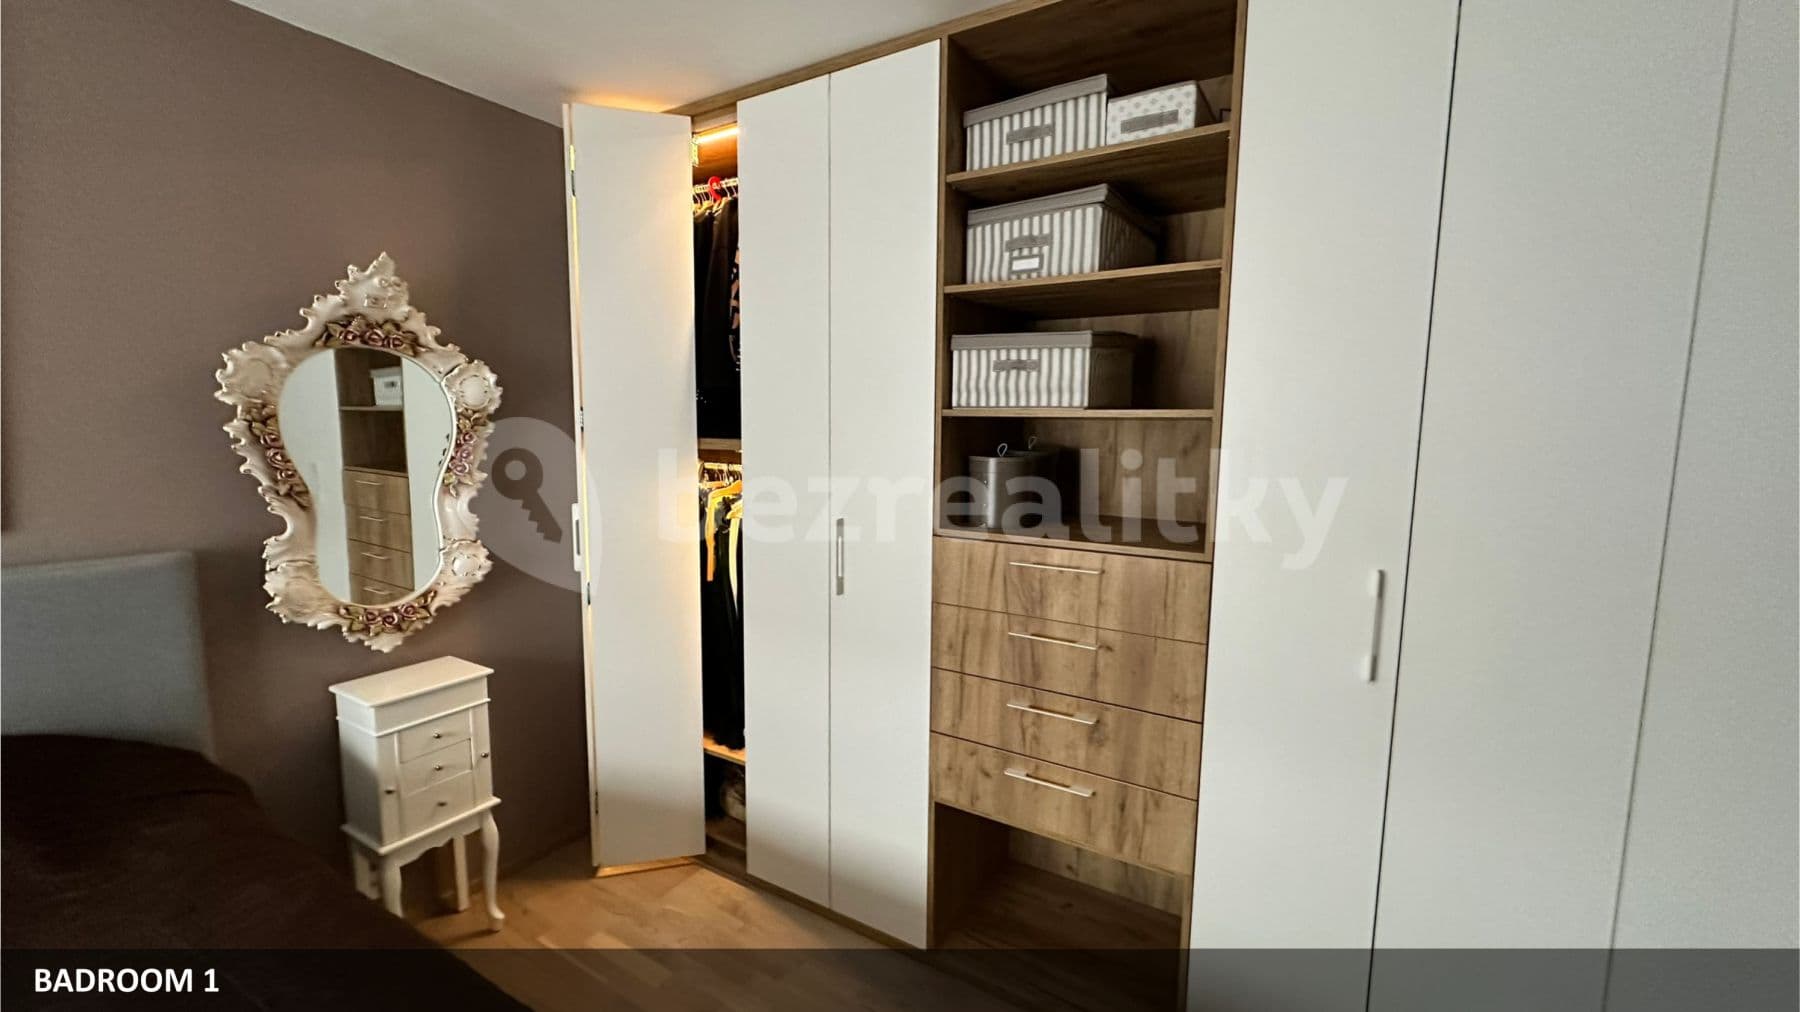 3 bedroom with open-plan kitchen flat for sale, 122 m², Plzeňská, Prague, Prague